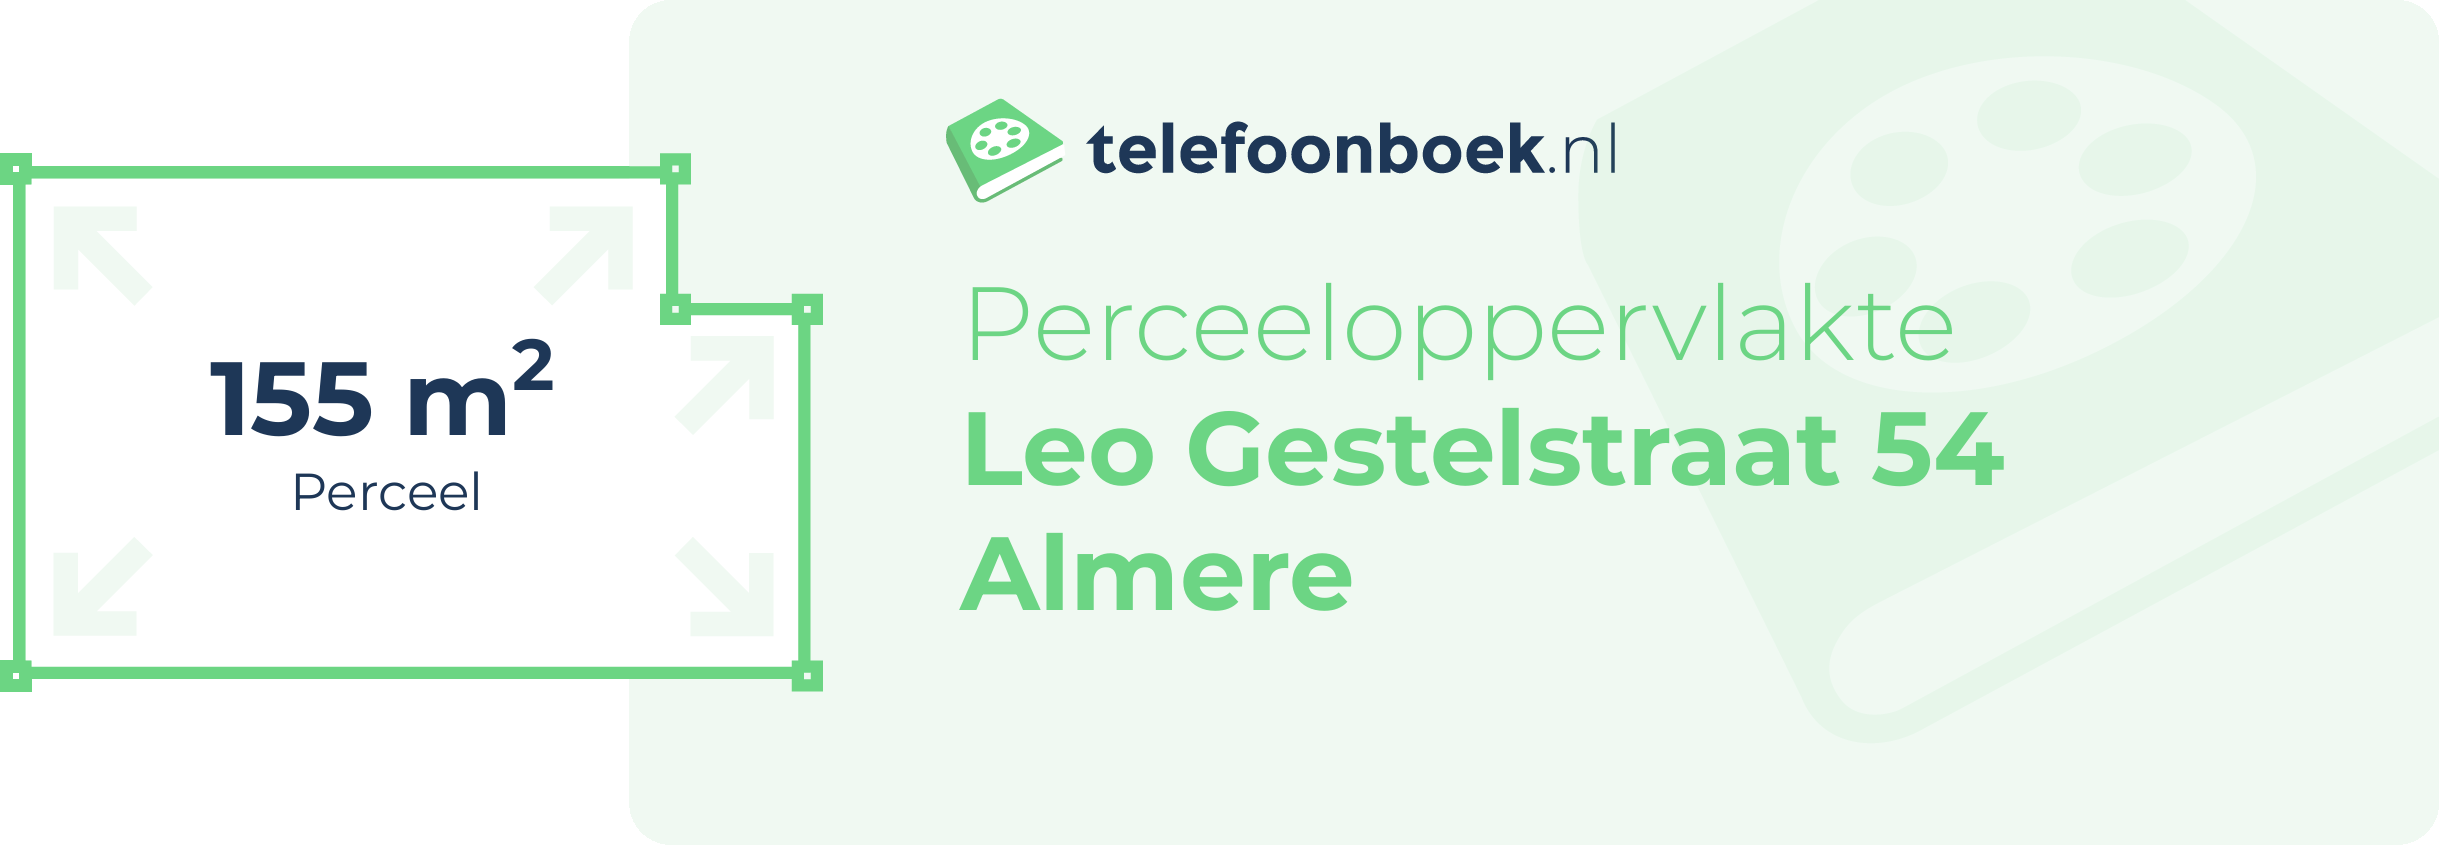 Perceeloppervlakte Leo Gestelstraat 54 Almere